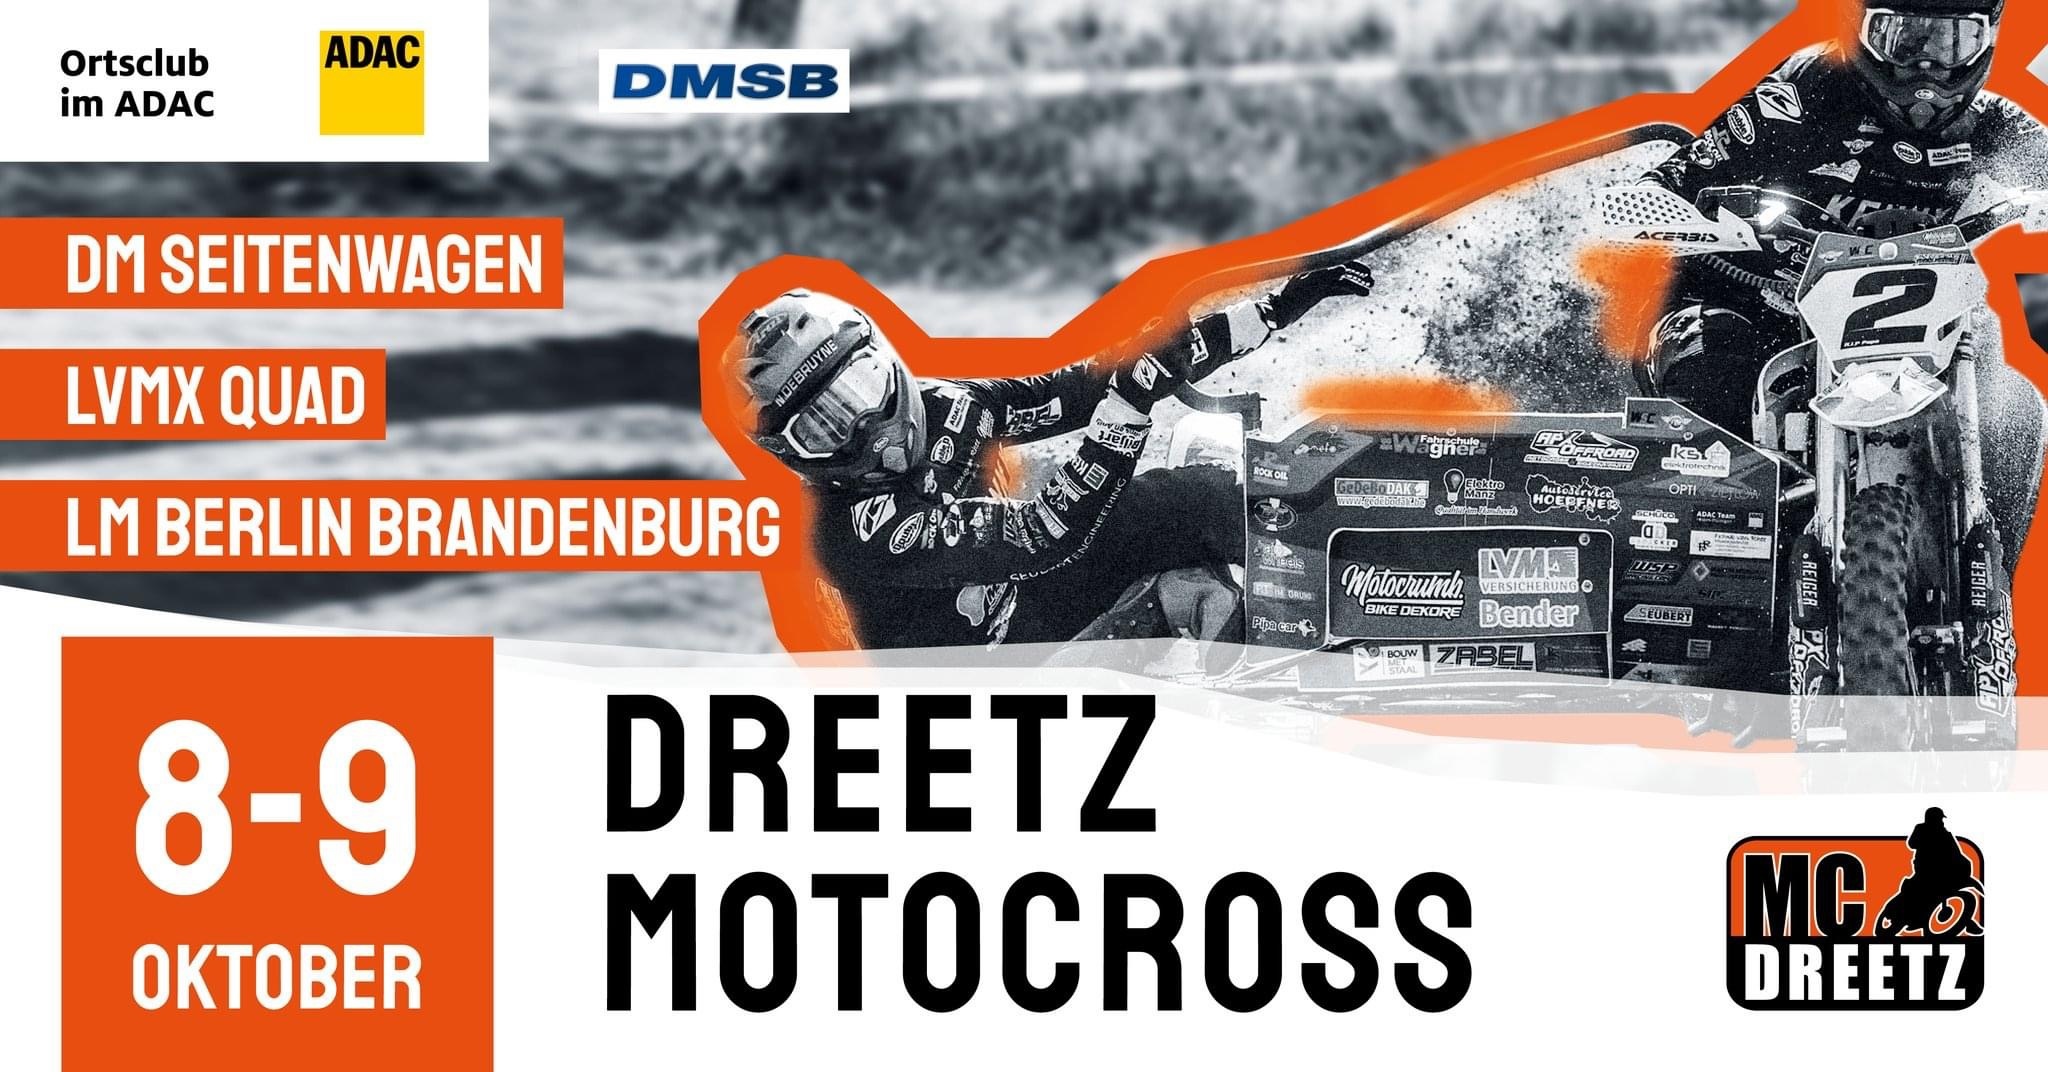 Dreetz Dmsb - October 9, 2022